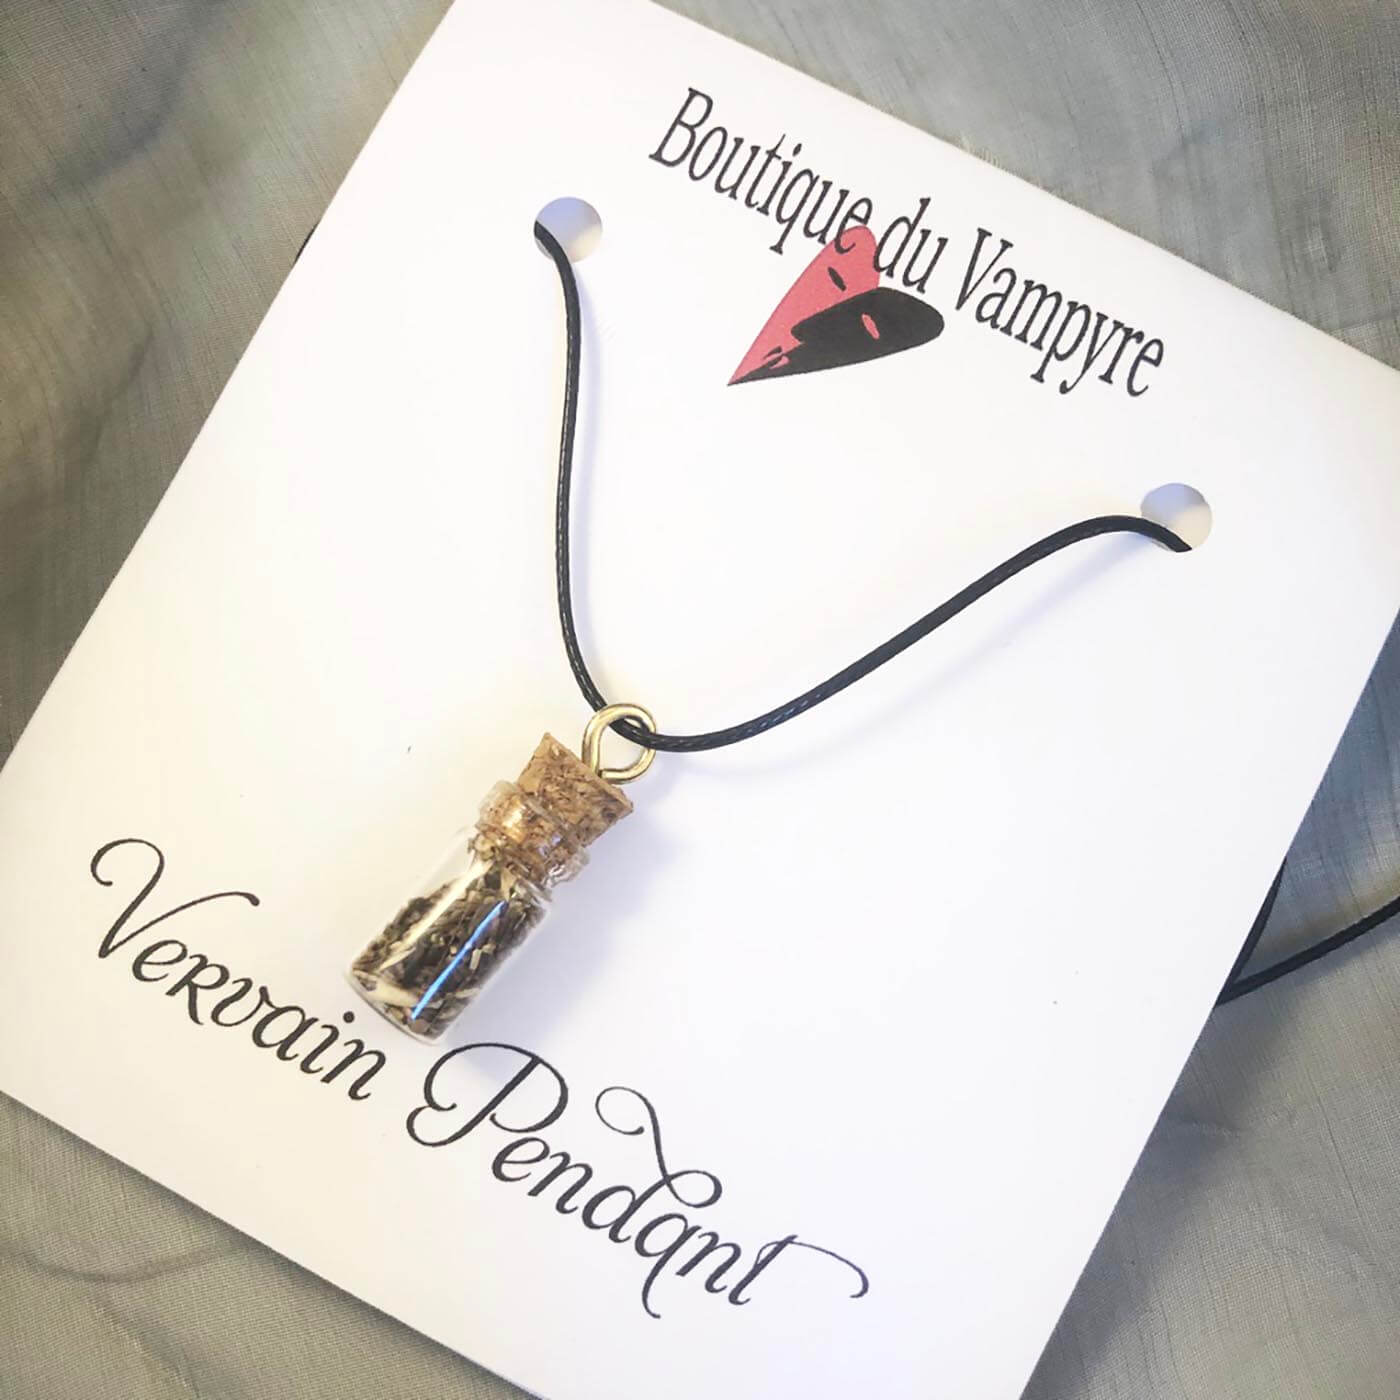 Spooky Blood Vial Necklace! Looks like real blood! – HottestTrendsPrint